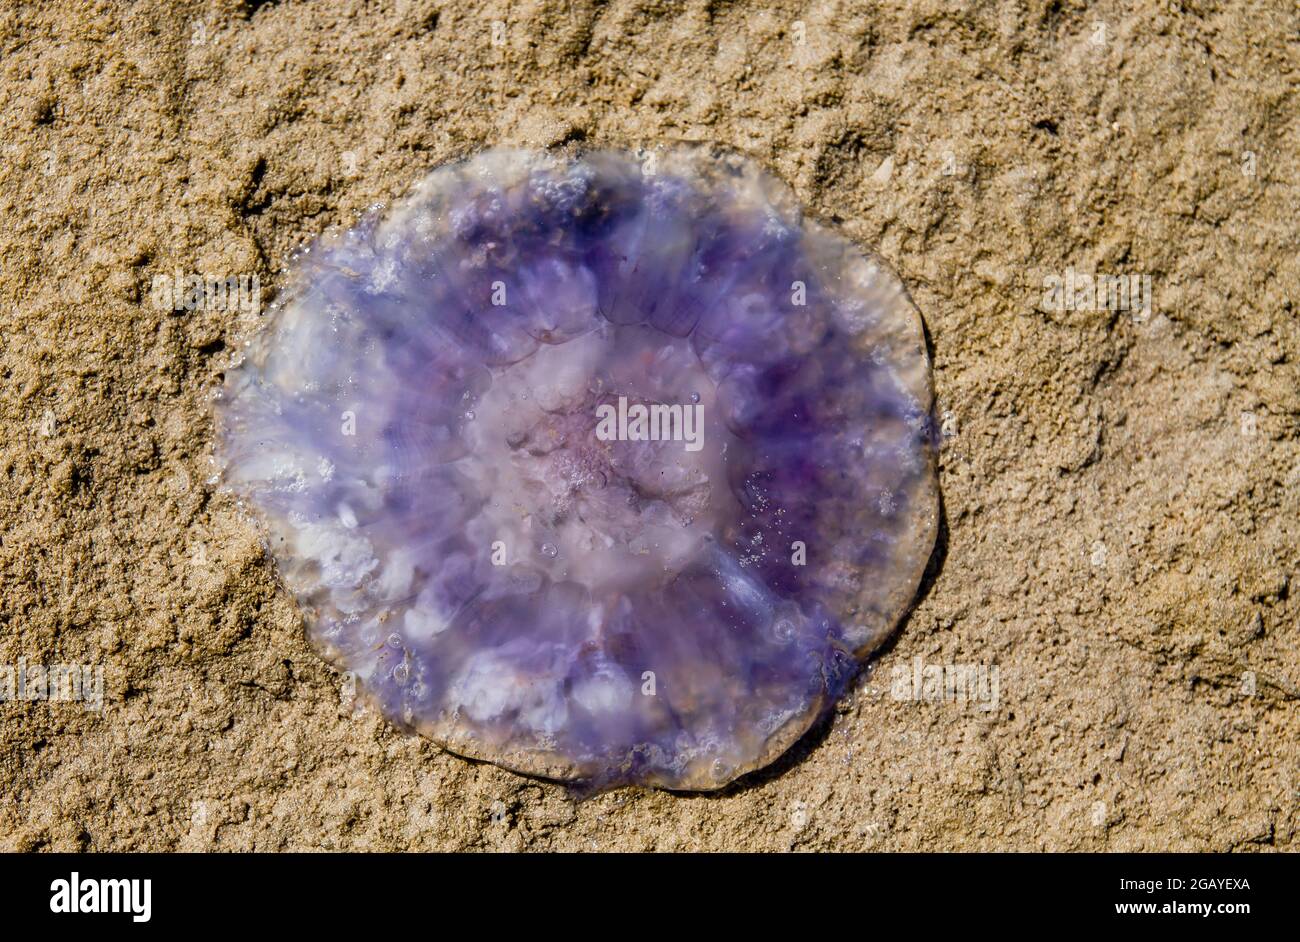 Purple jellyfish beached on the sand Stock Photo